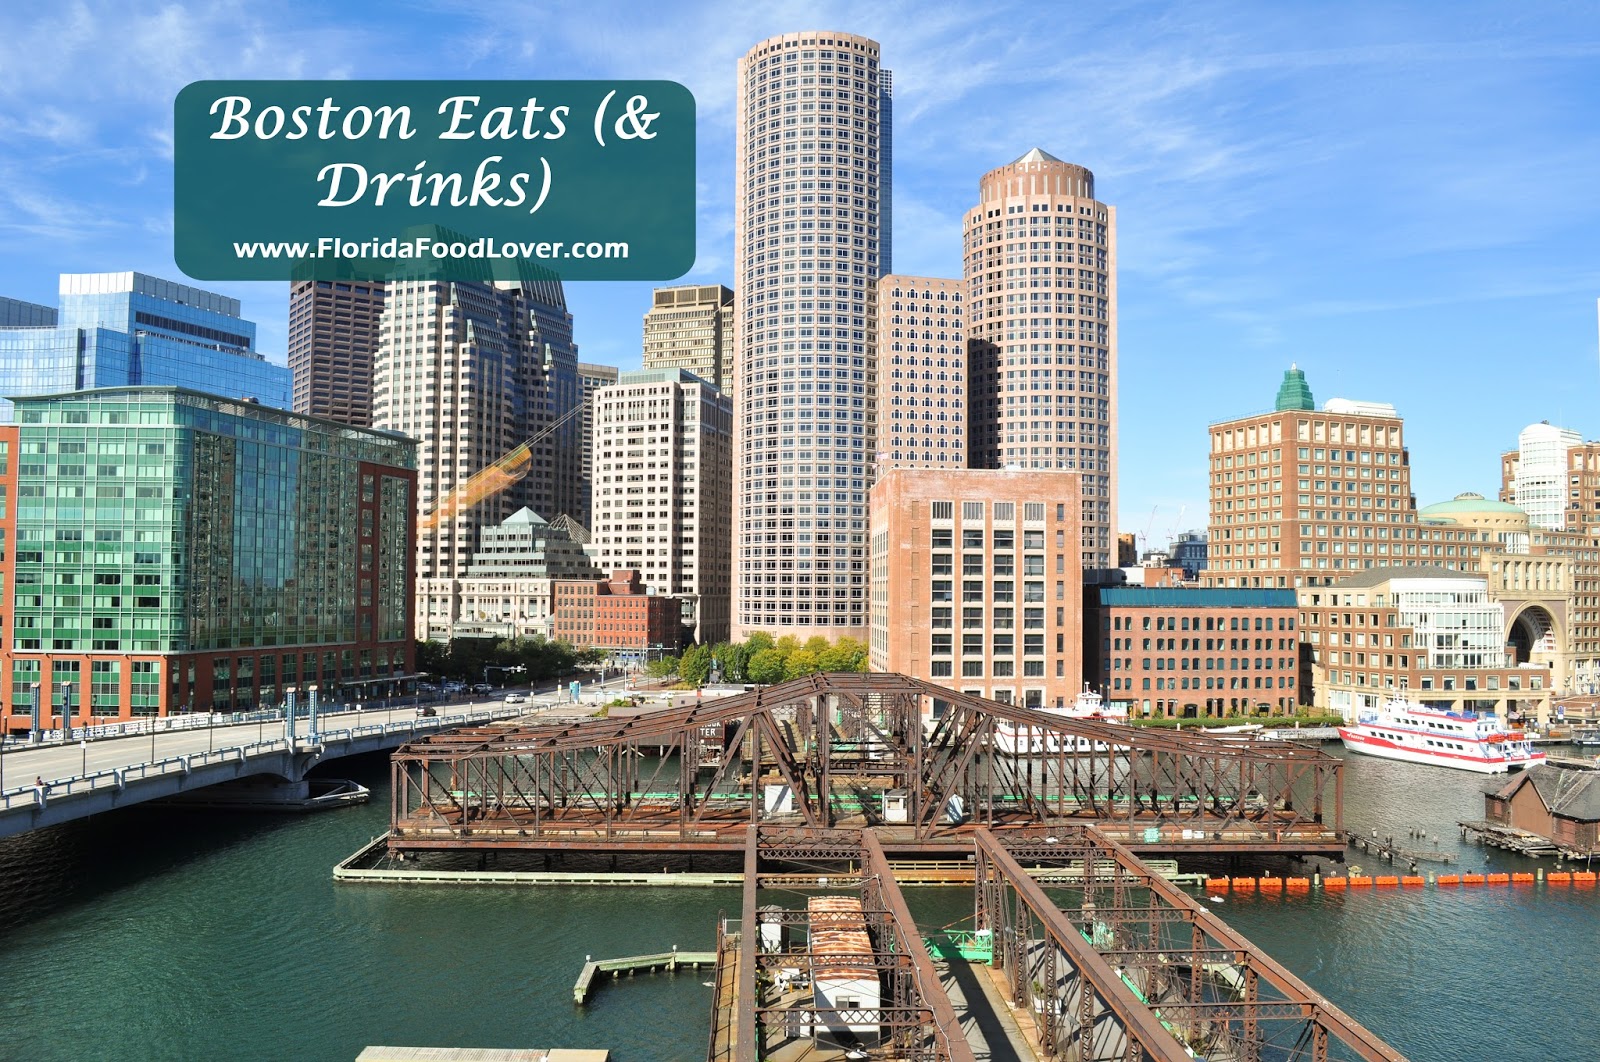 Florida Food Lover Boston Eats (& Drinks)